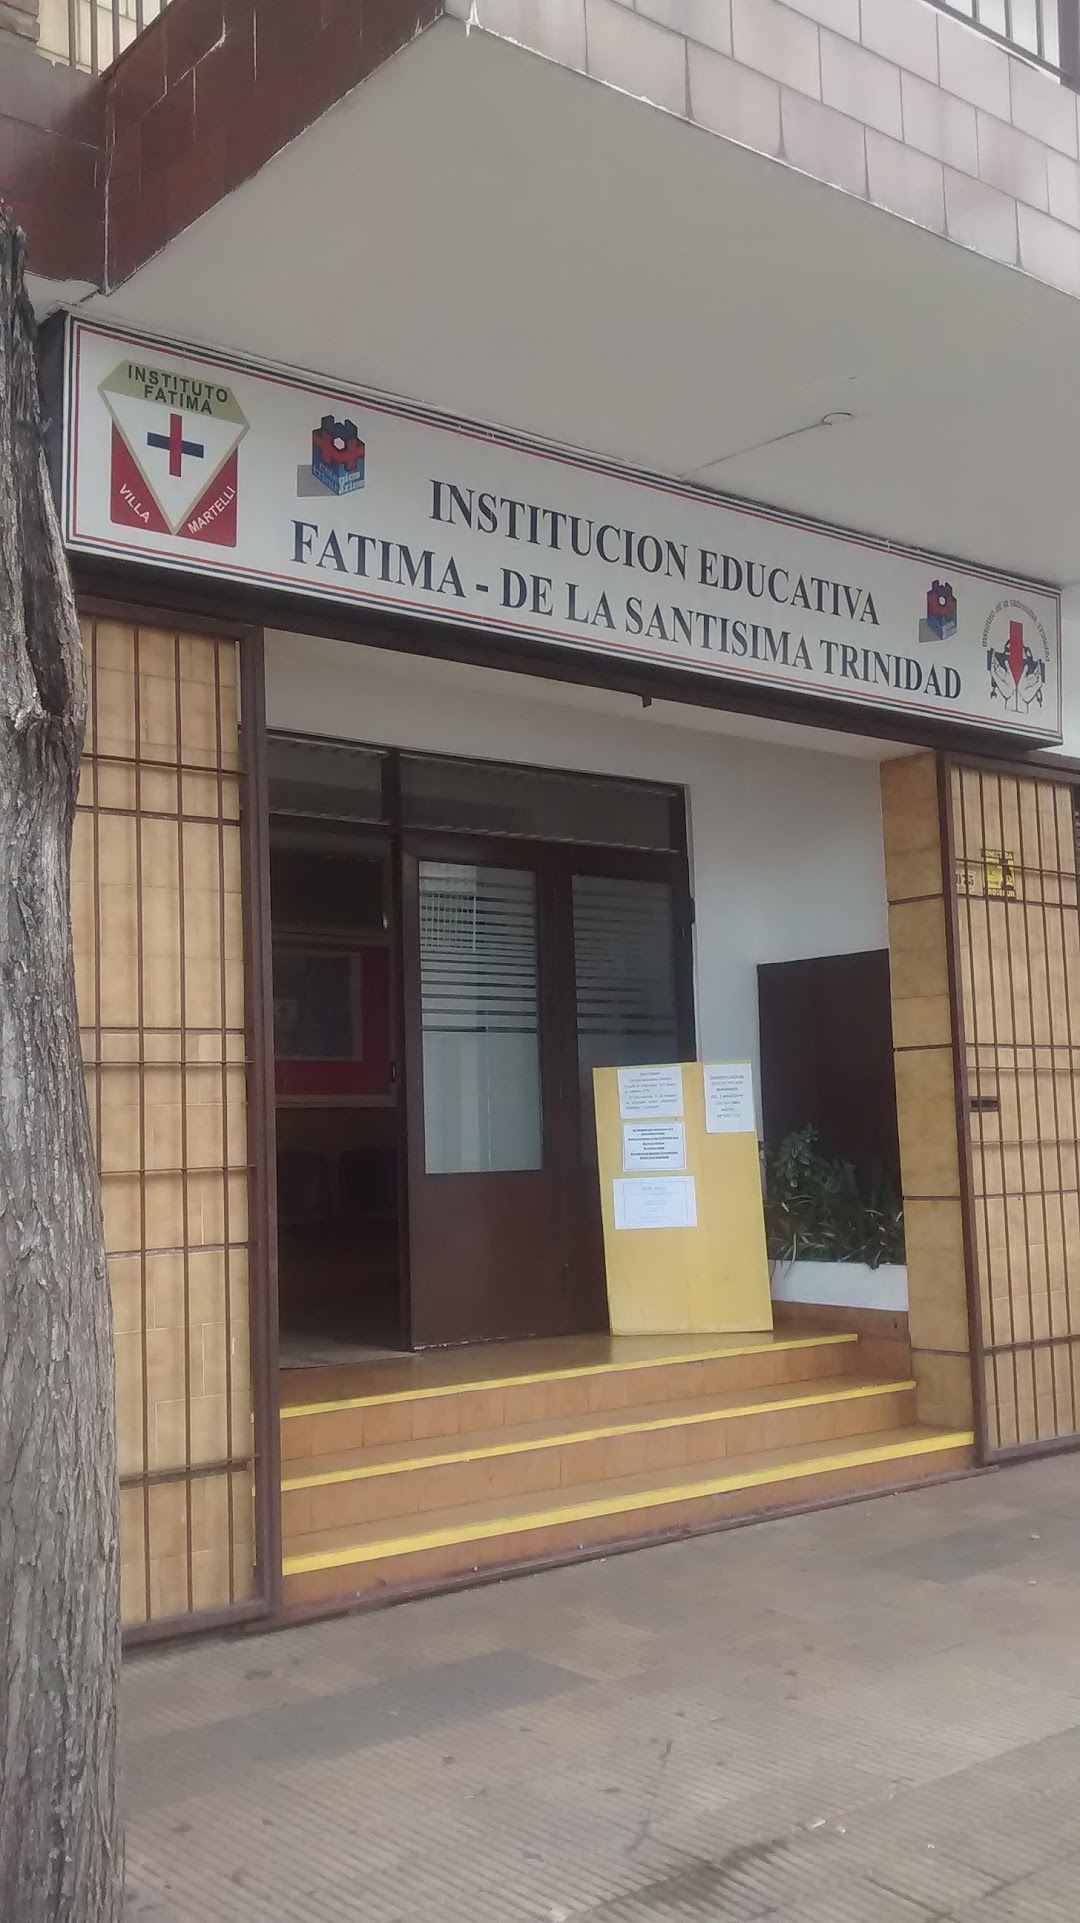 INSTITUTO EDUCATIVO FATIMA-DE LA SANTISIMA TRINIDAD